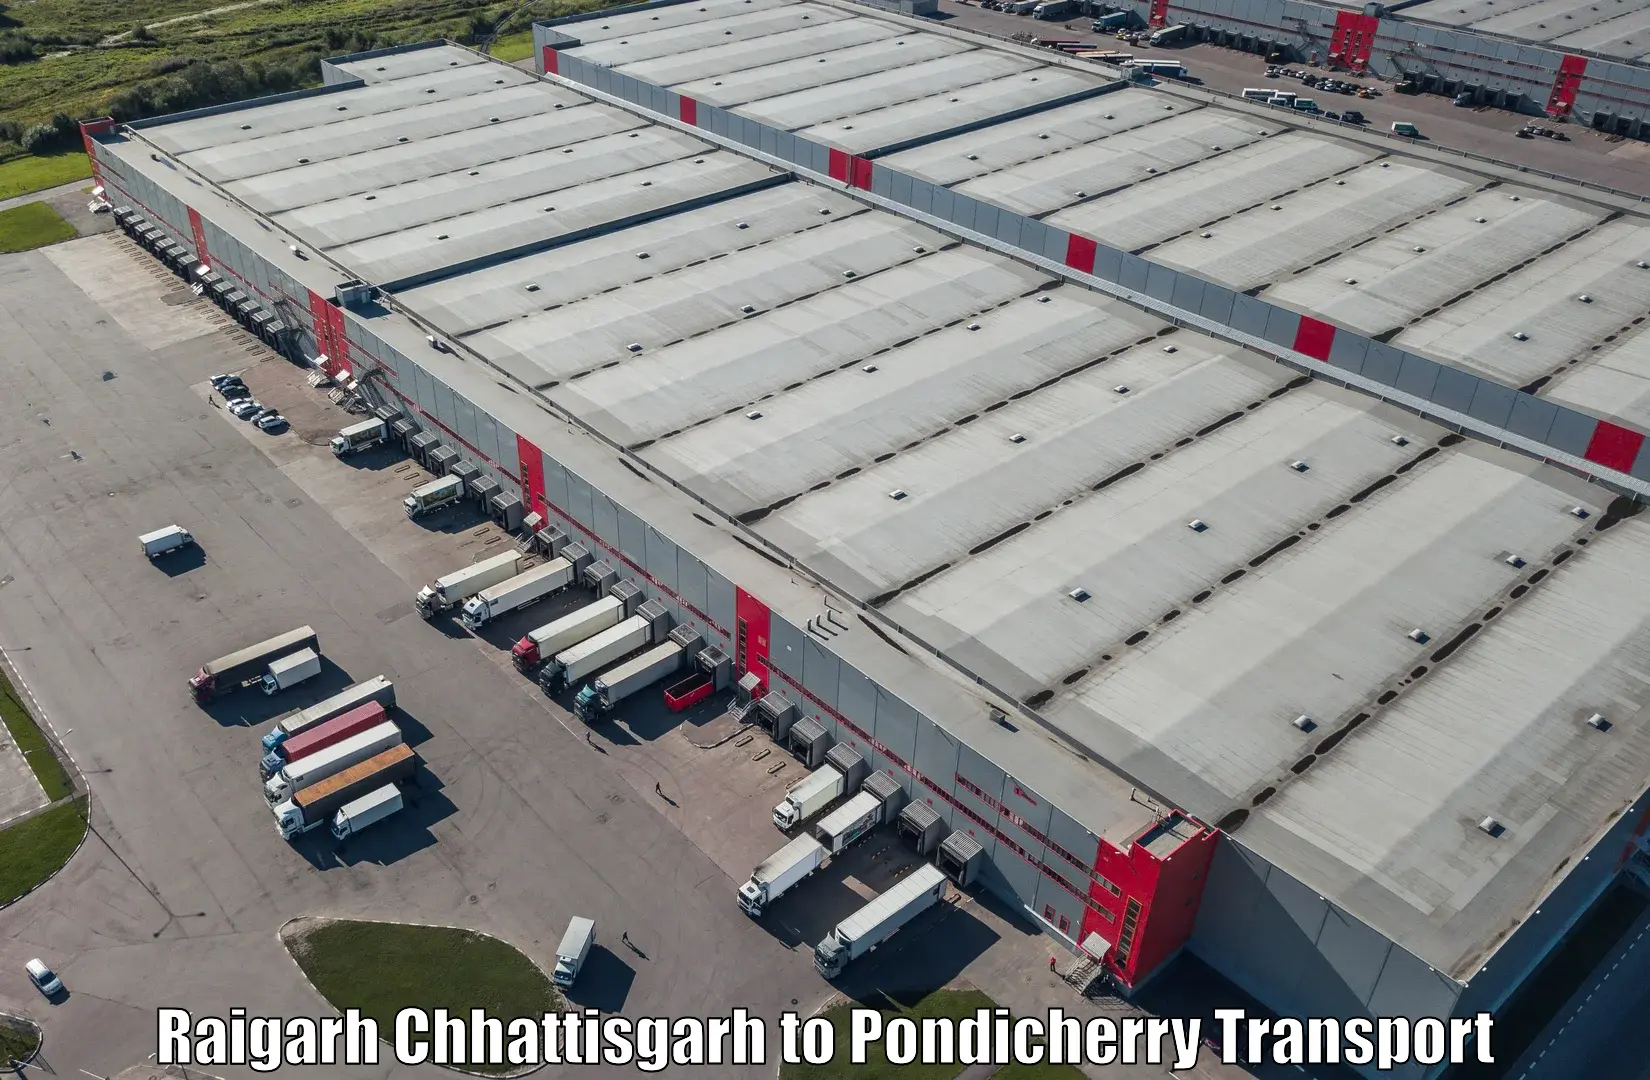 Delivery service Raigarh Chhattisgarh to Pondicherry